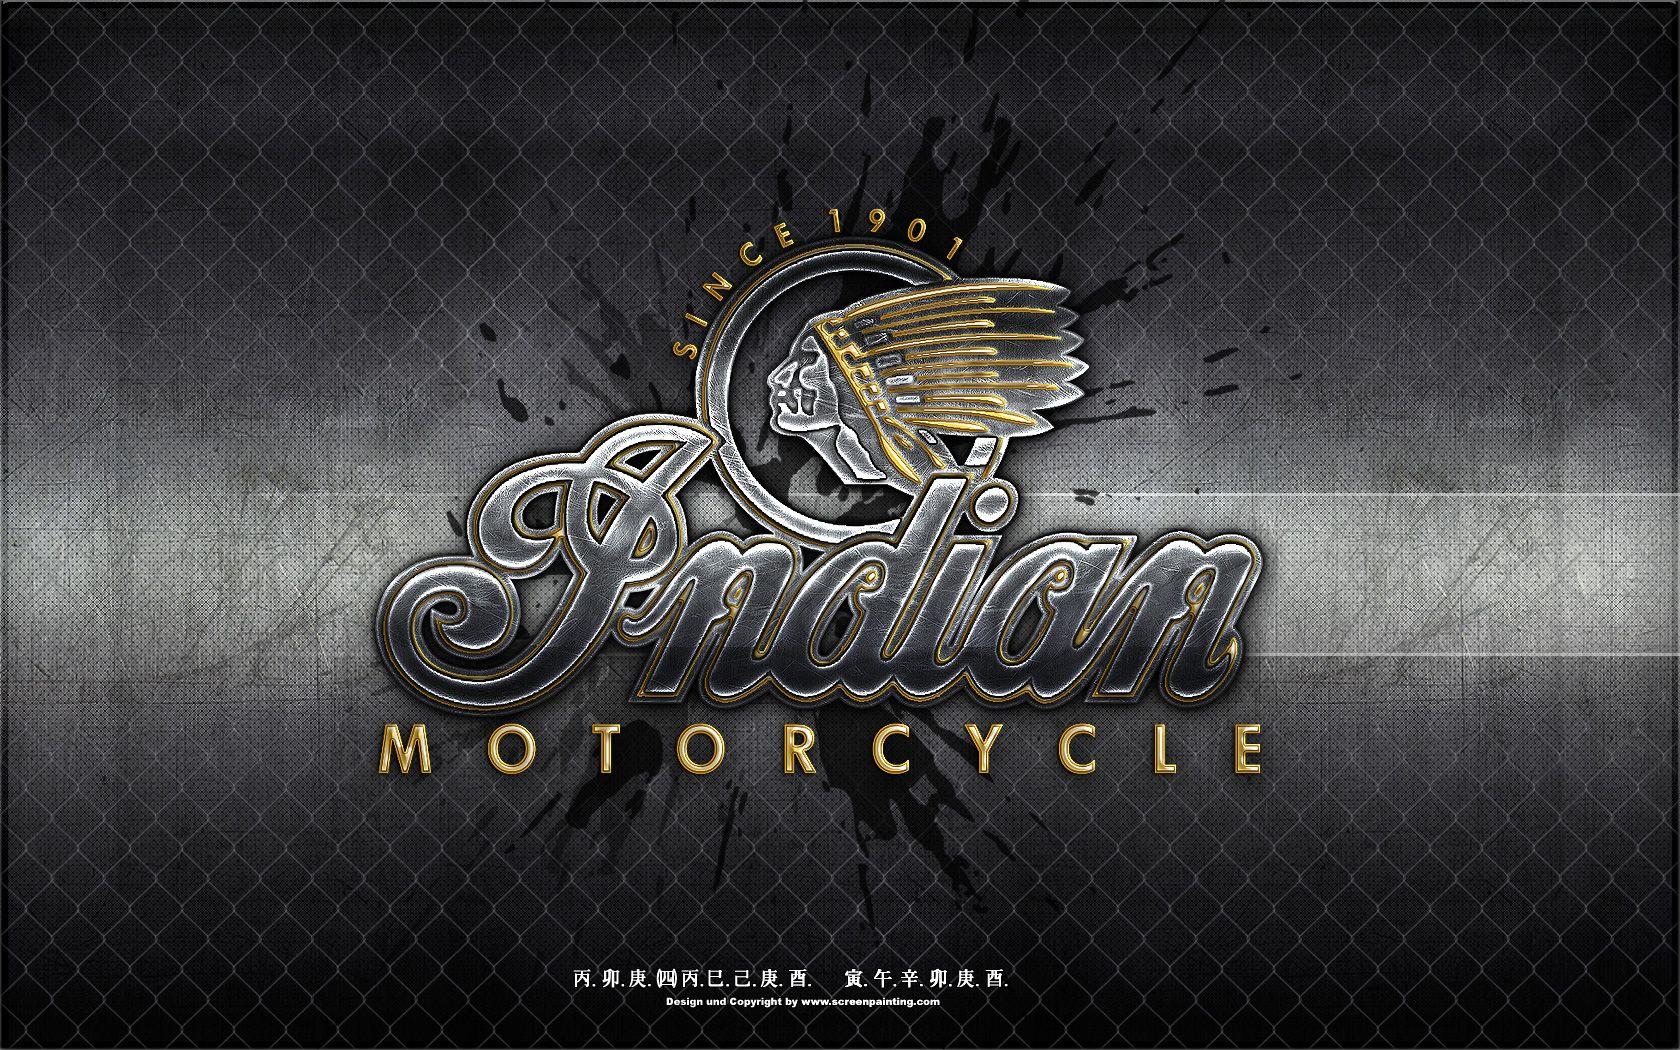 Motorcycle Club Logo Background Wallpaper. I HD Image